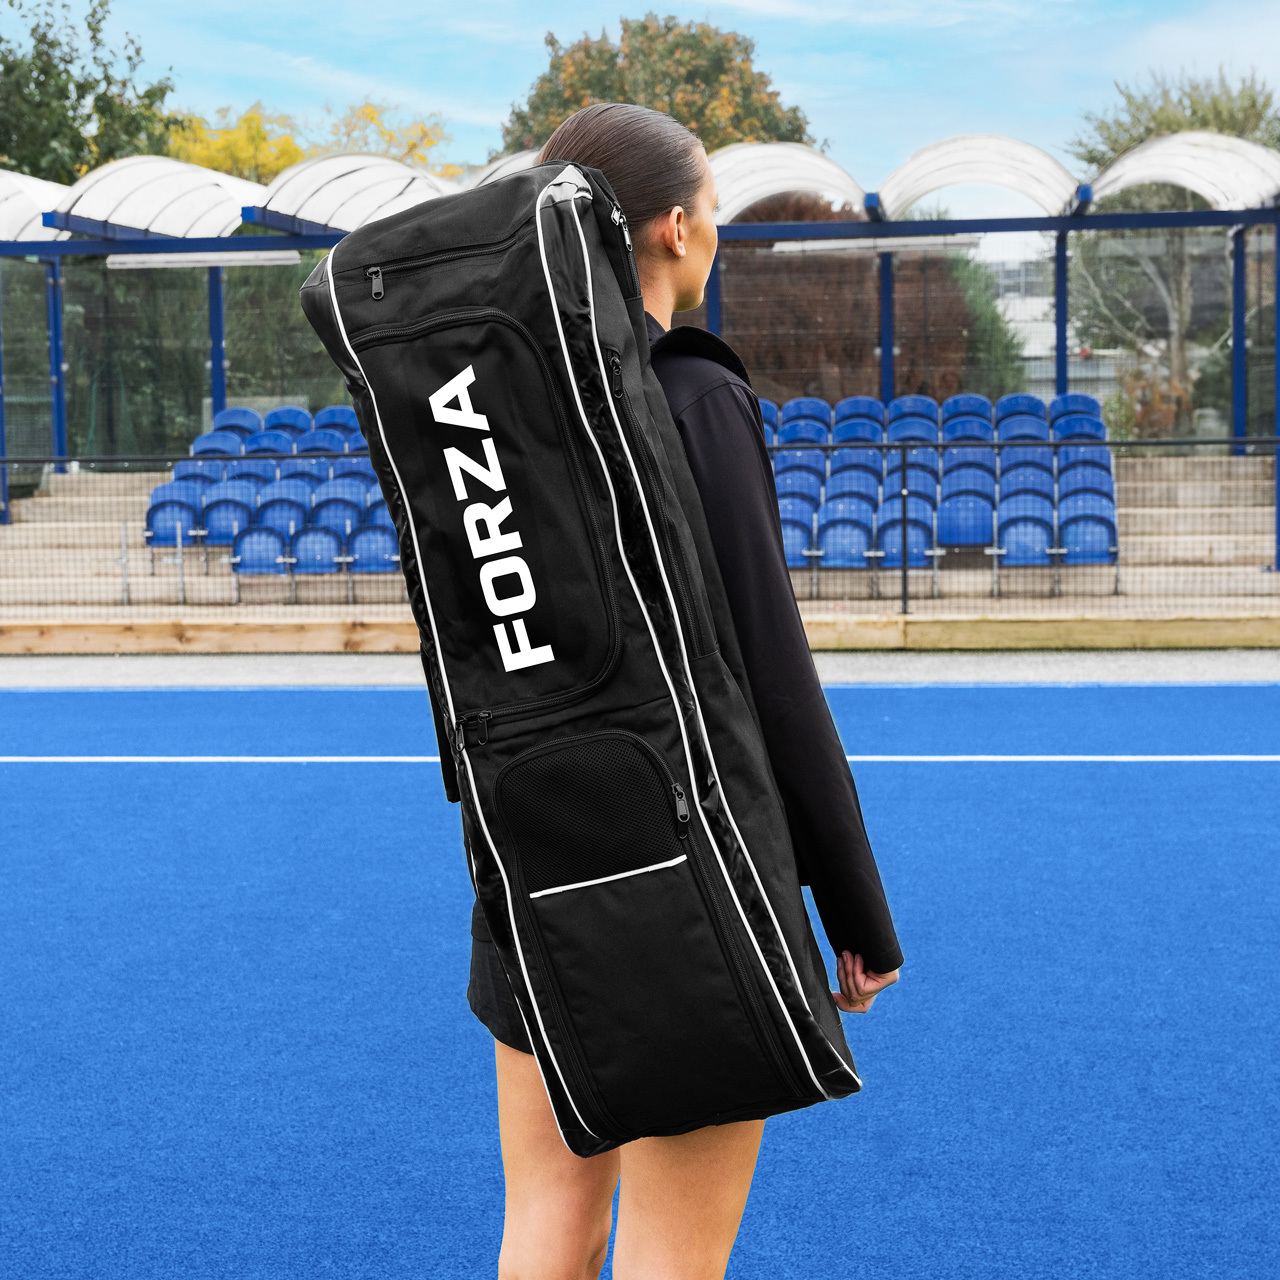 FORZA Pro Hockey Stick Bag